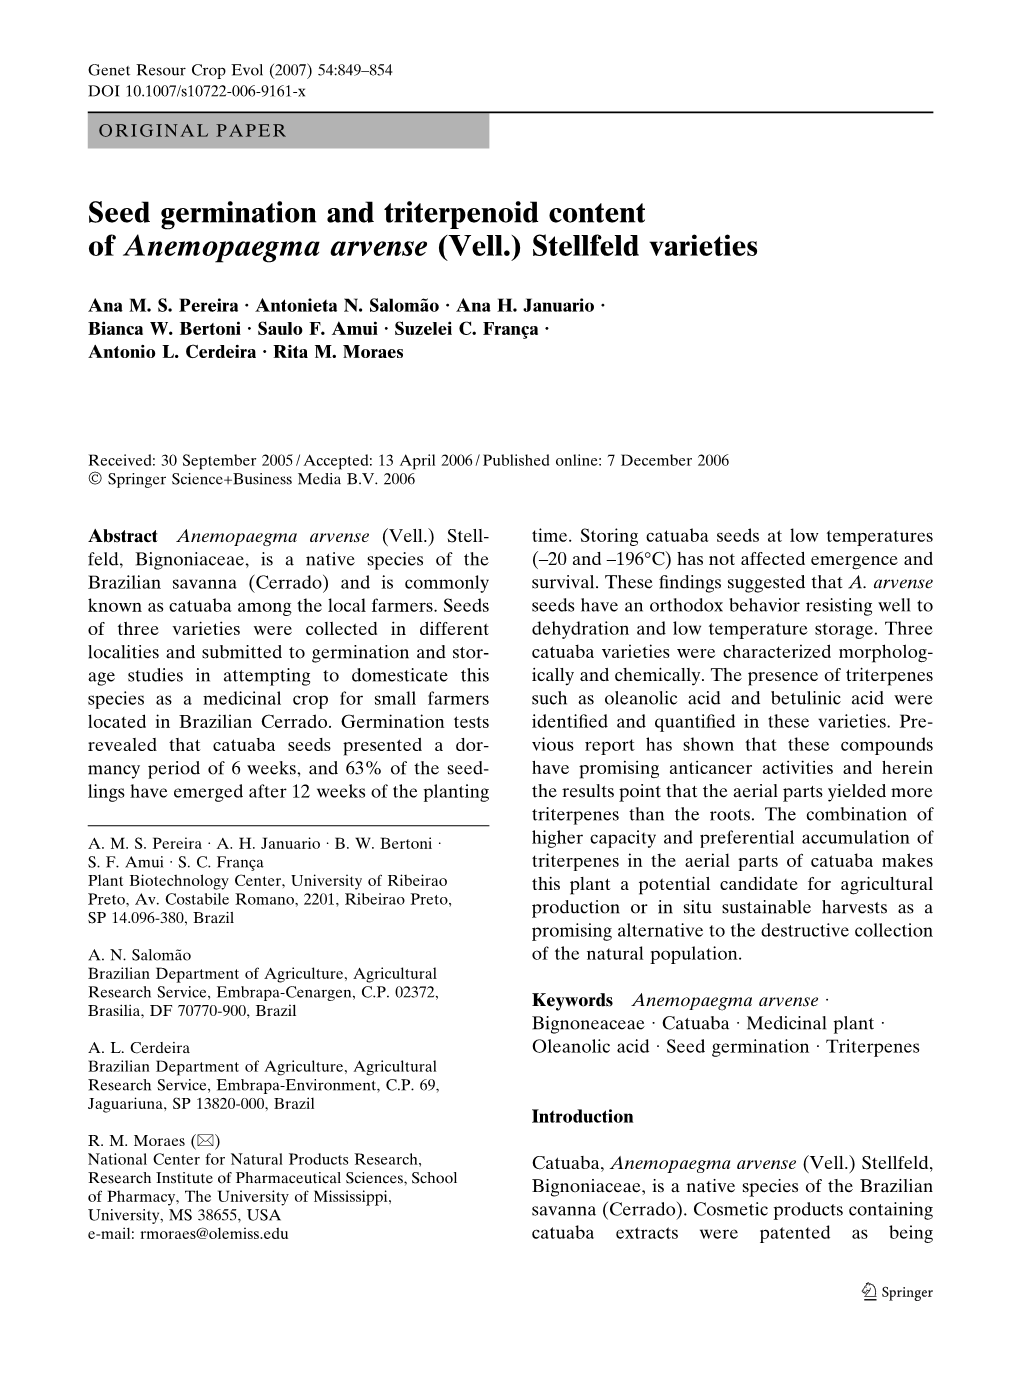 Seed Germination and Triterpenoid Content of Anemopaegma Arvense (Vell.) Stellfeld Varieties